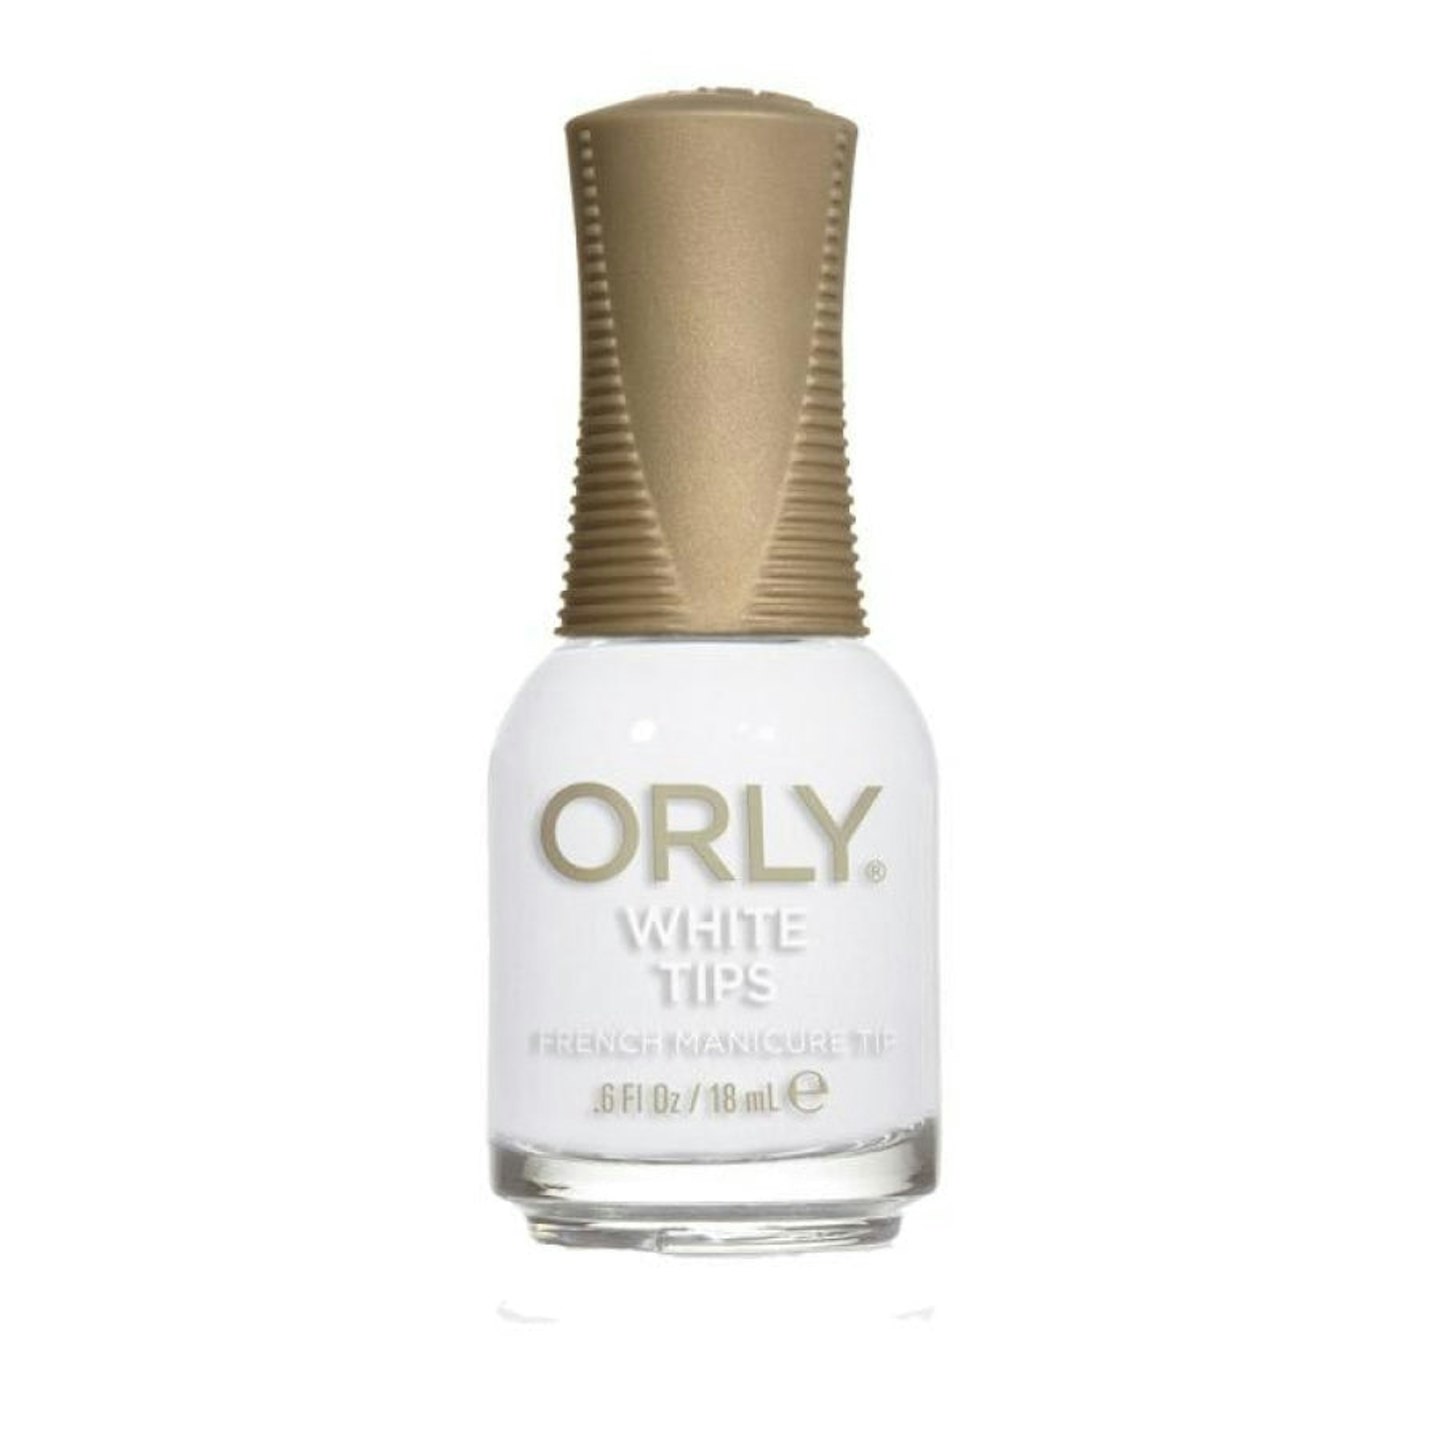 Orly White Tips Nail Polish 18MLOrly White Tips Nail Polish 18ML